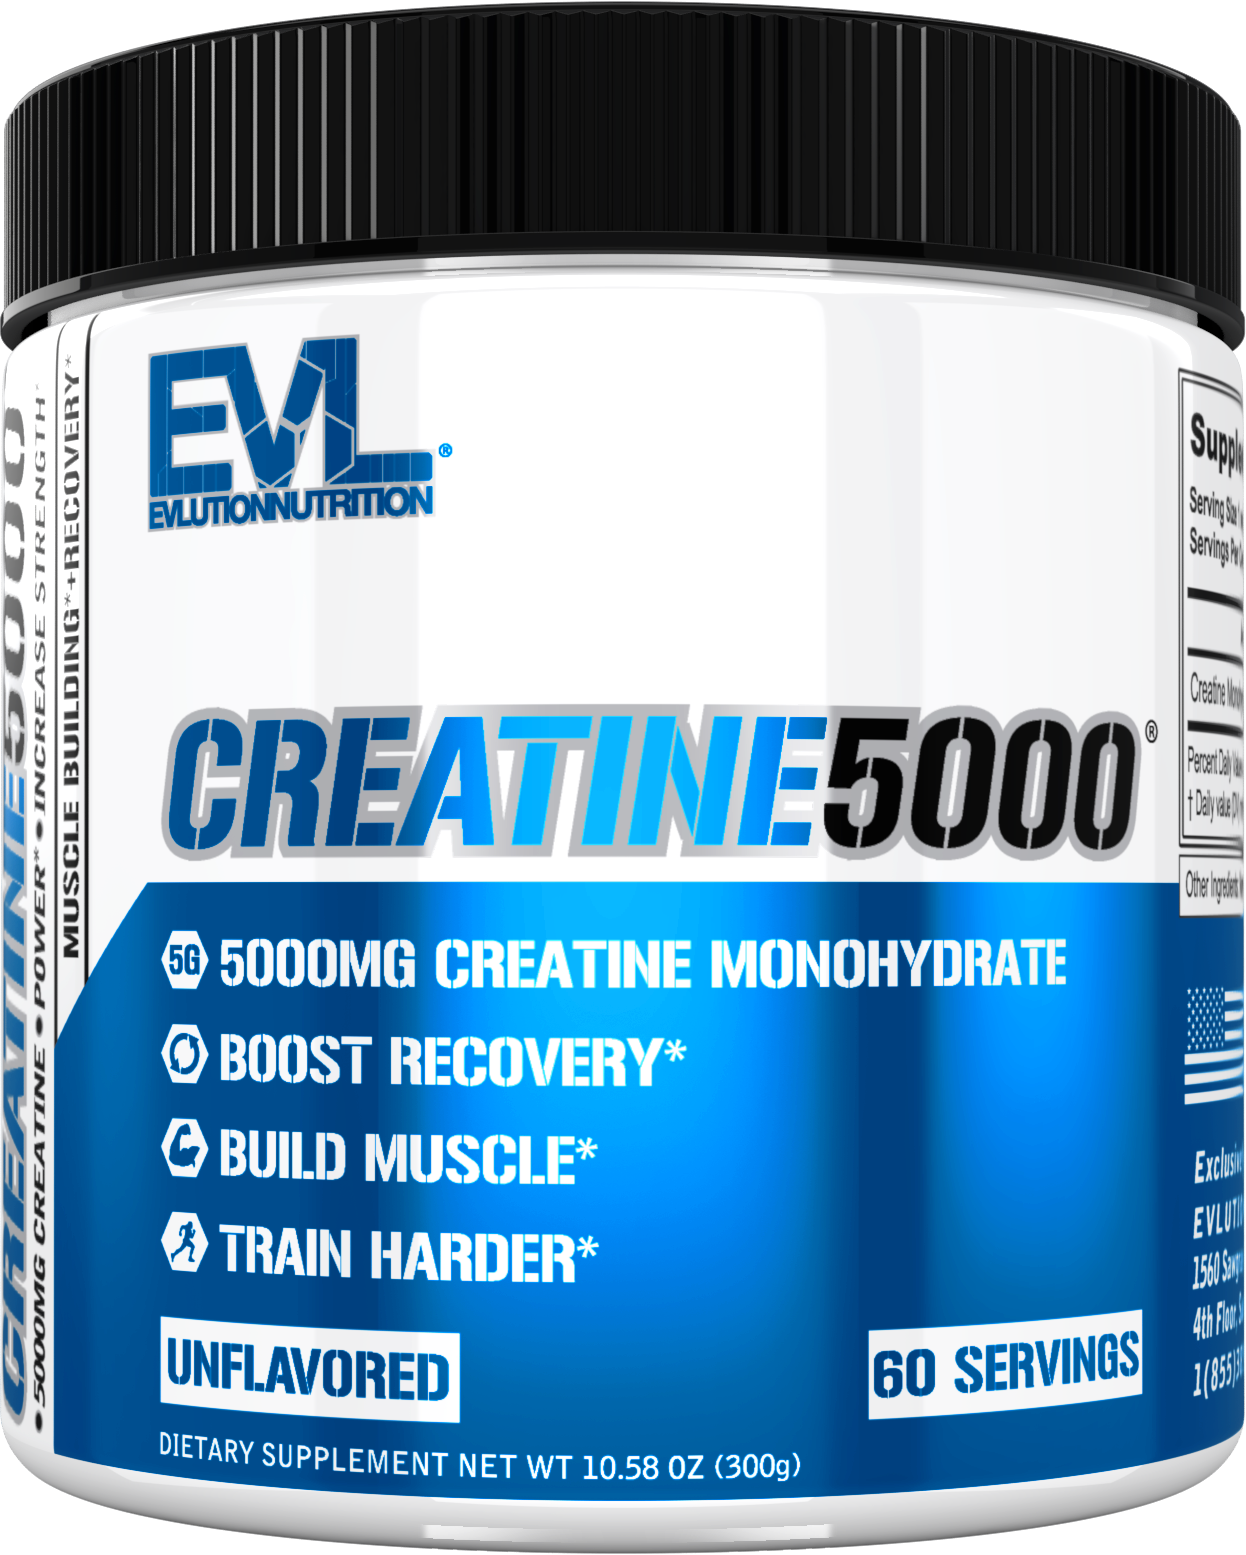 Evlution Nutrition Creatine 5000 Powder 60 Servings